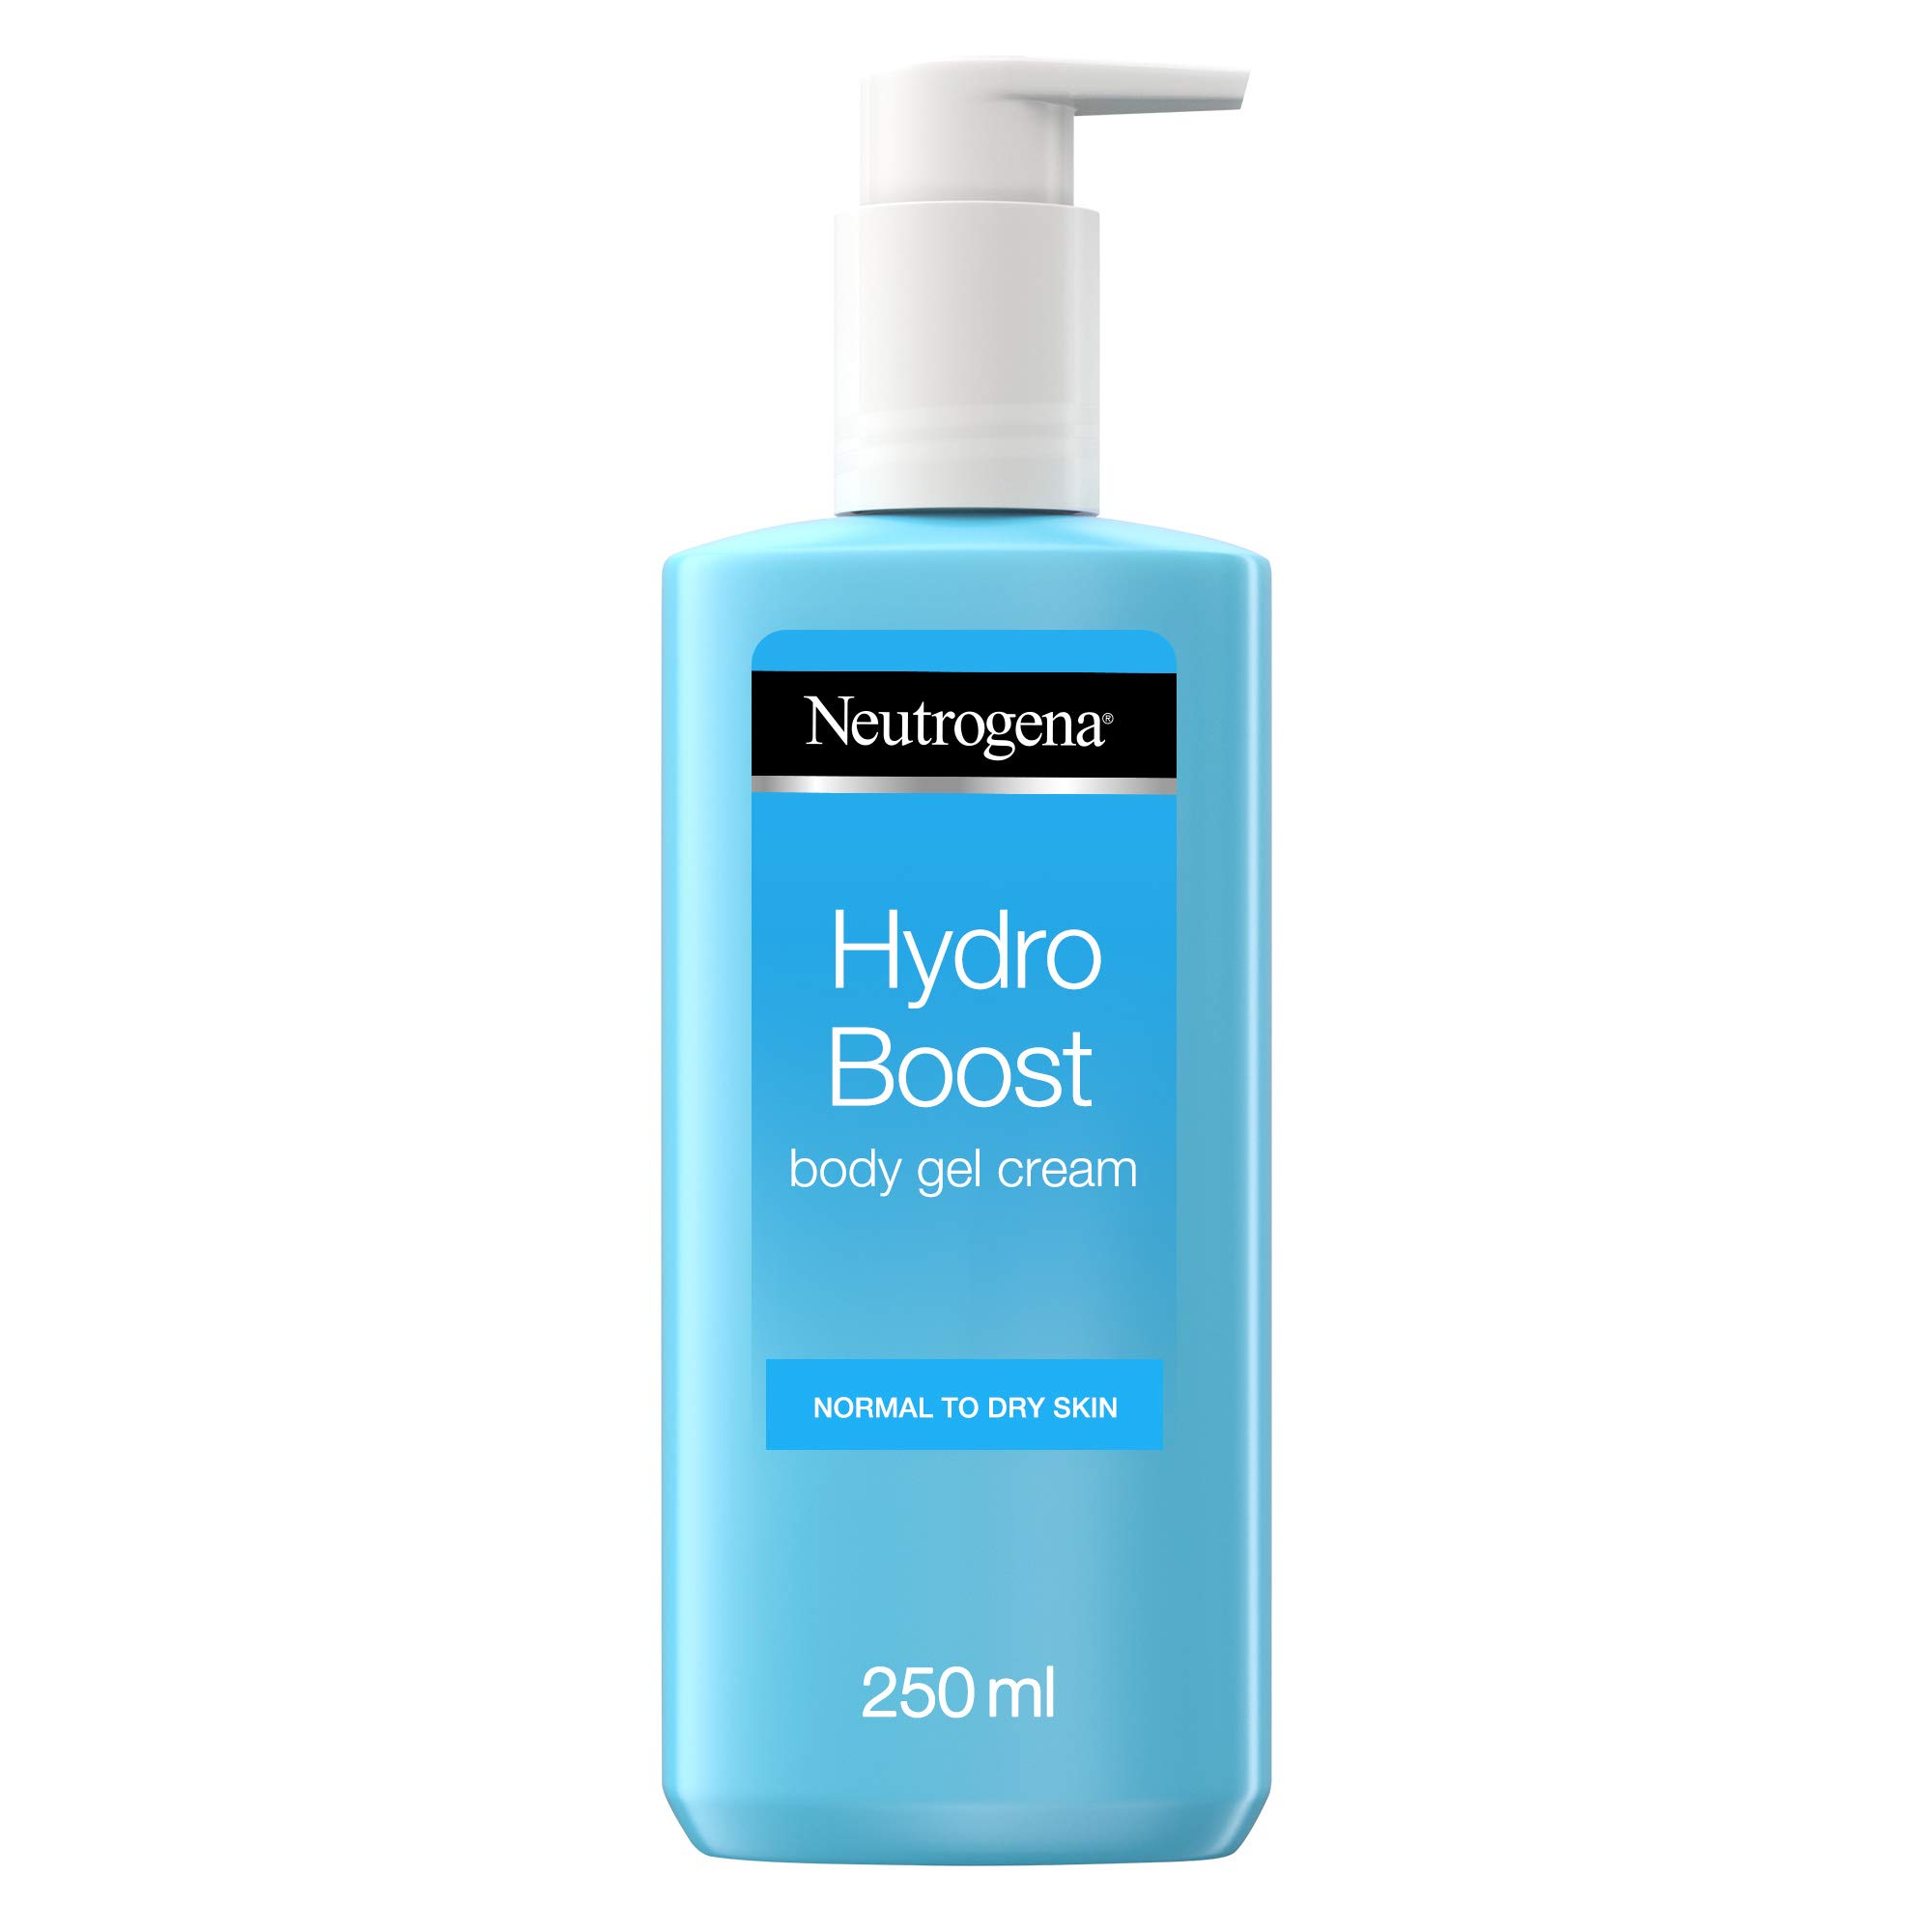 Neutrogena Hydro Boost Body Gel Cream, Citrus, 250 ml White